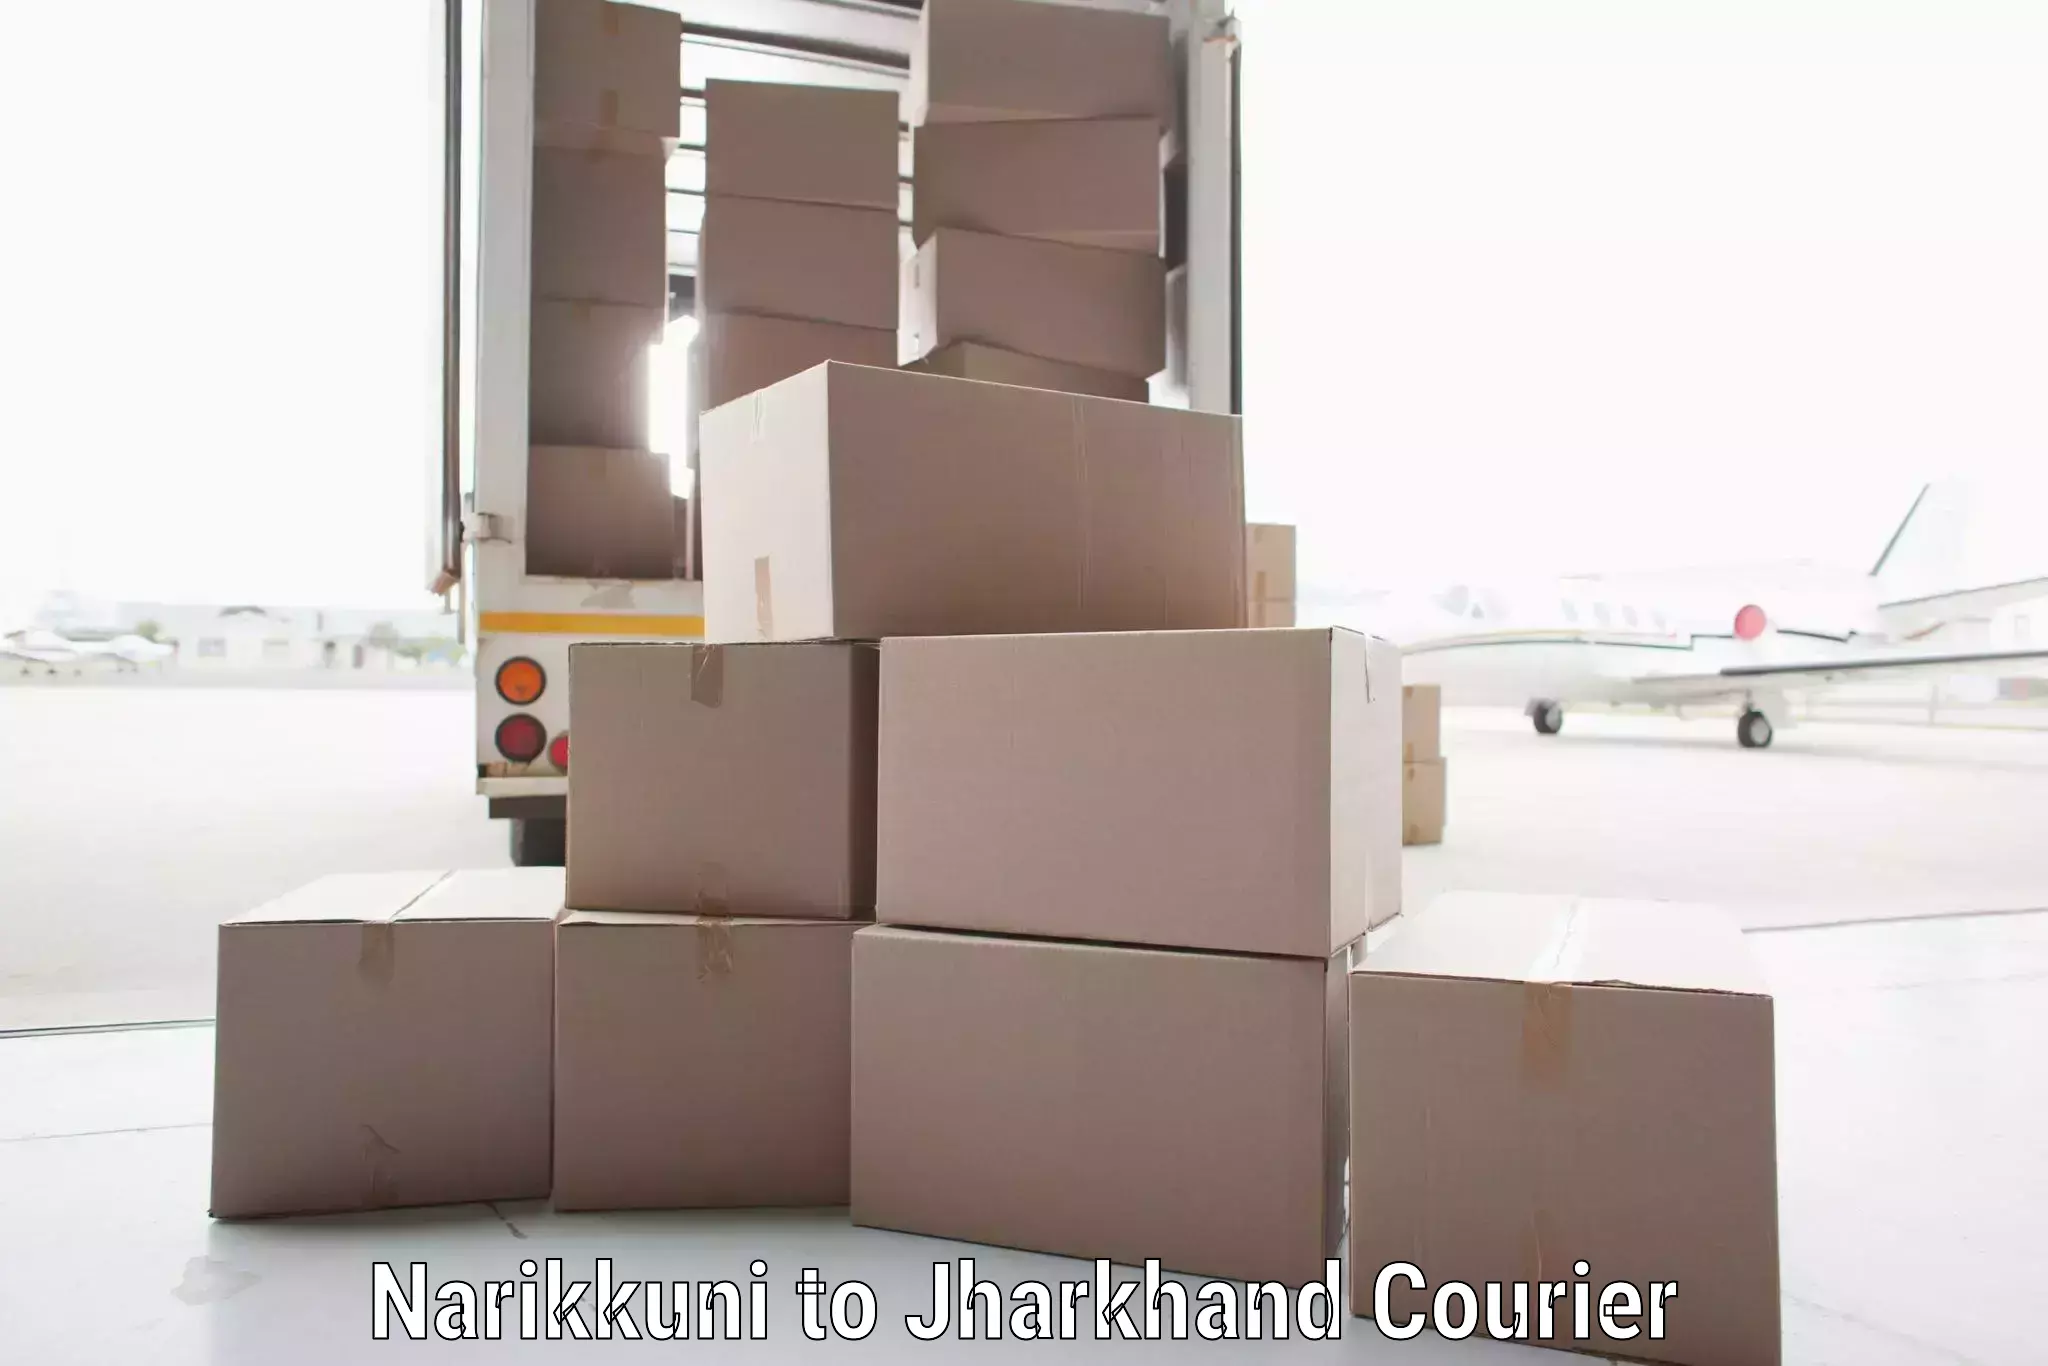 Reliable parcel services Narikkuni to Mahagama